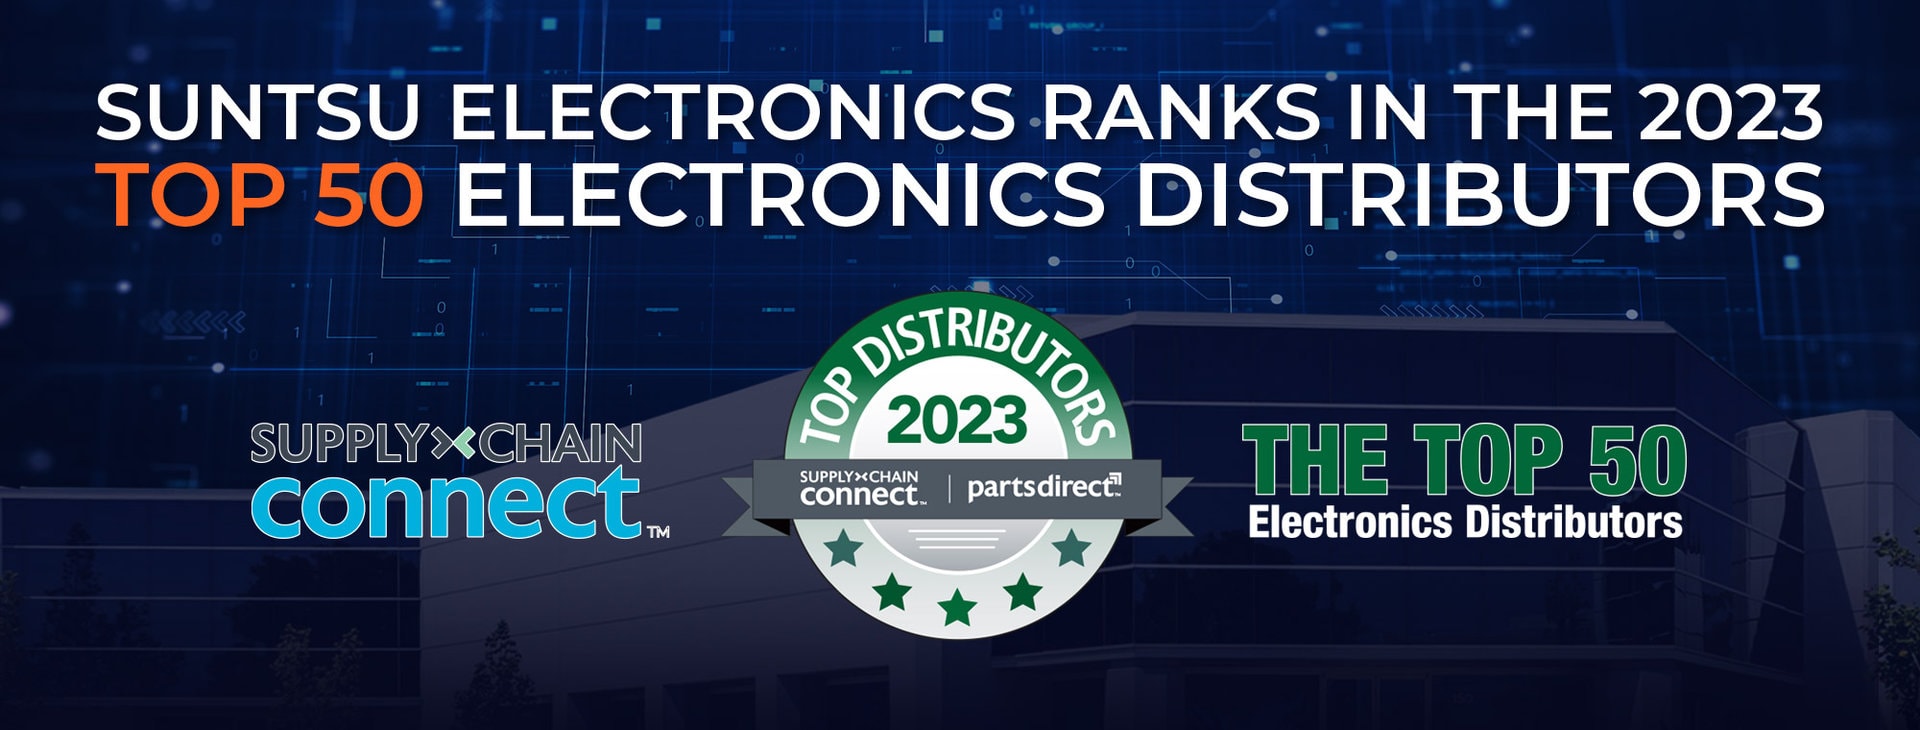 Suntsu Electronics Ranks in the 2023 Top 50 Electronics Distributors